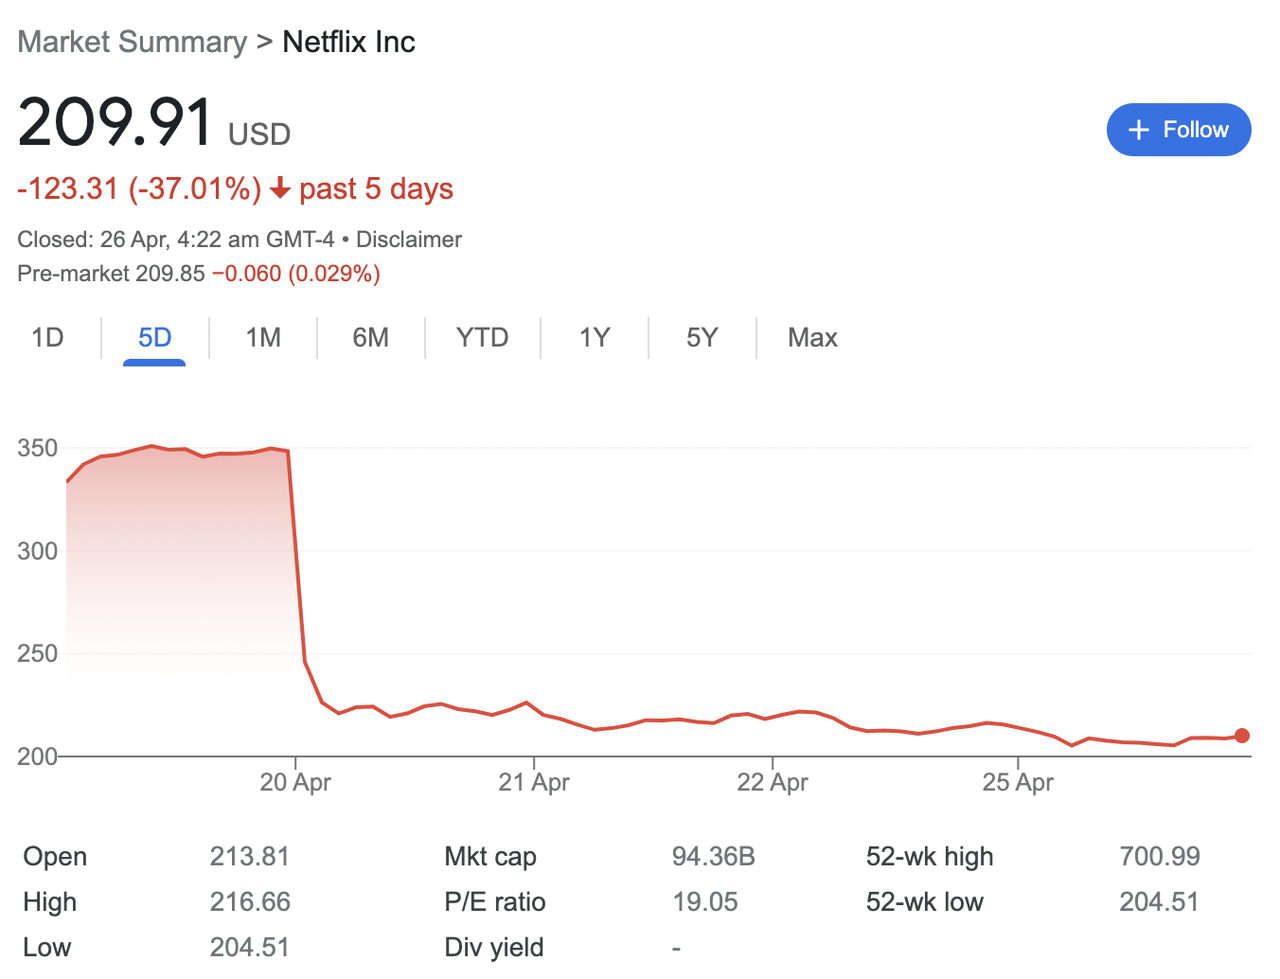 Netflix stock 5-day trend